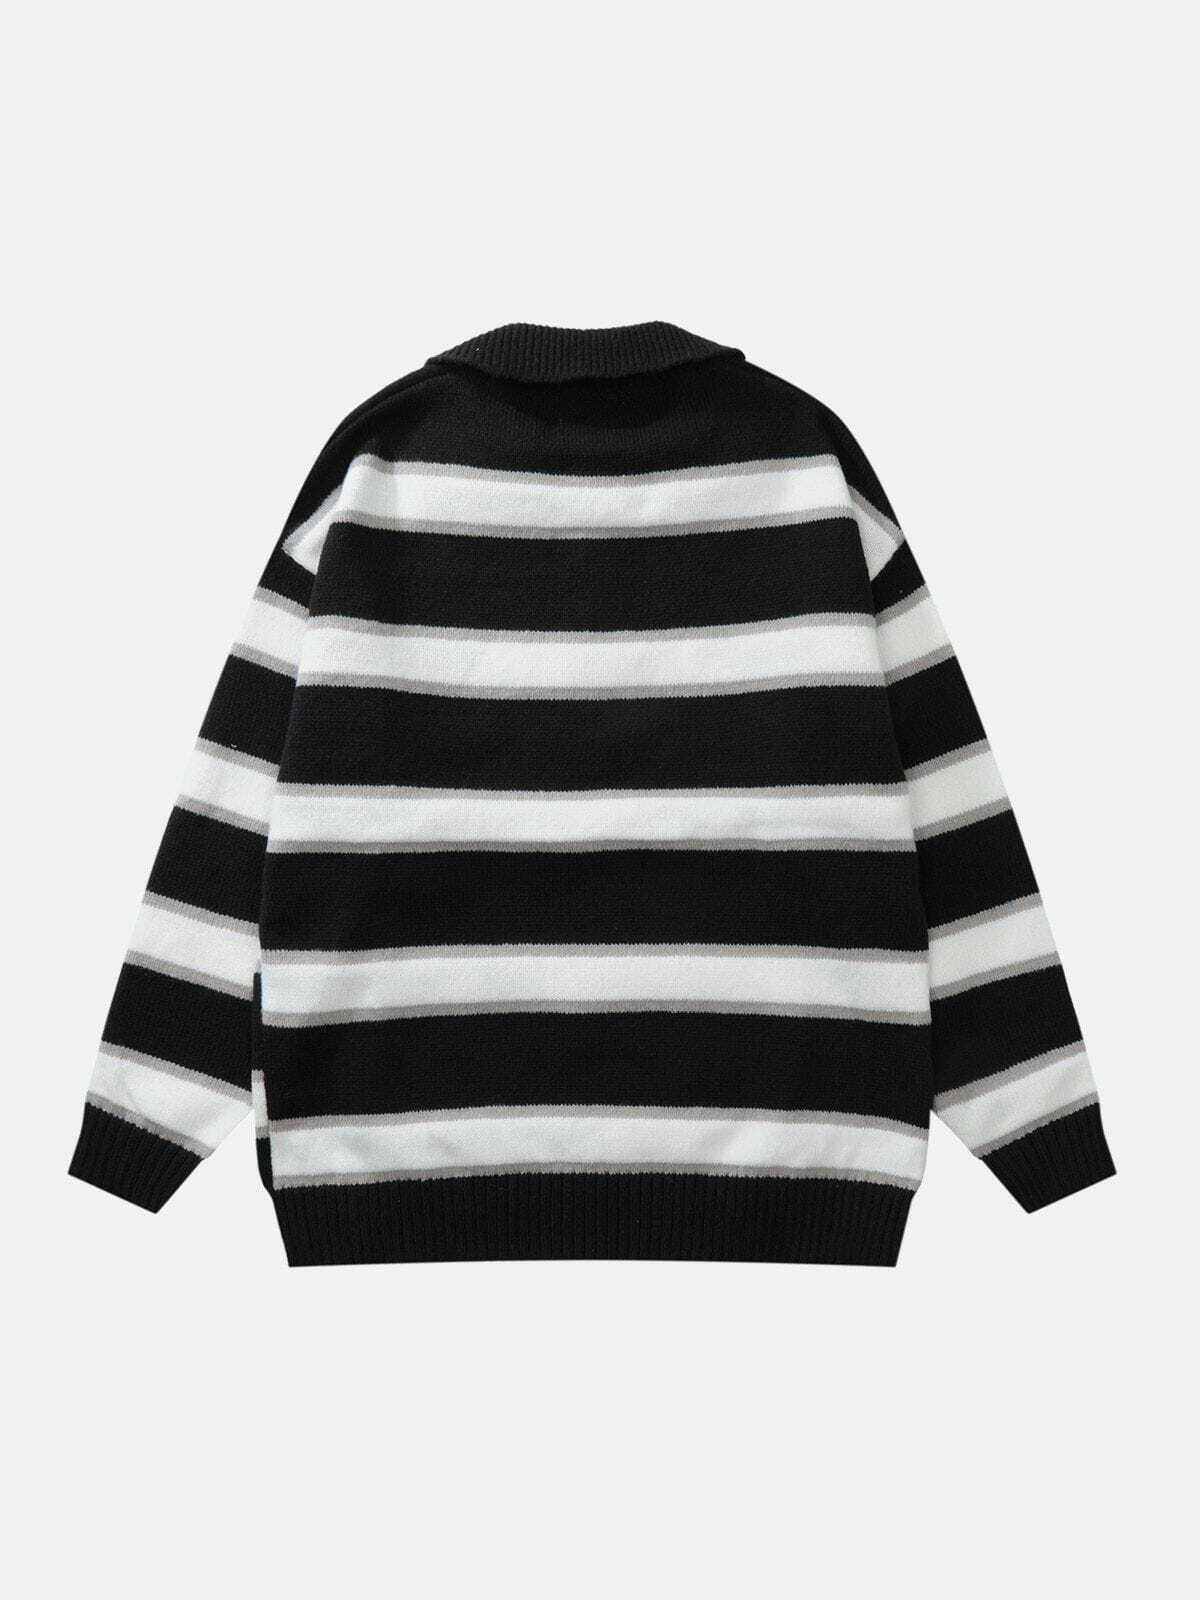 striped polo sweater edgy & retro streetwear 4842